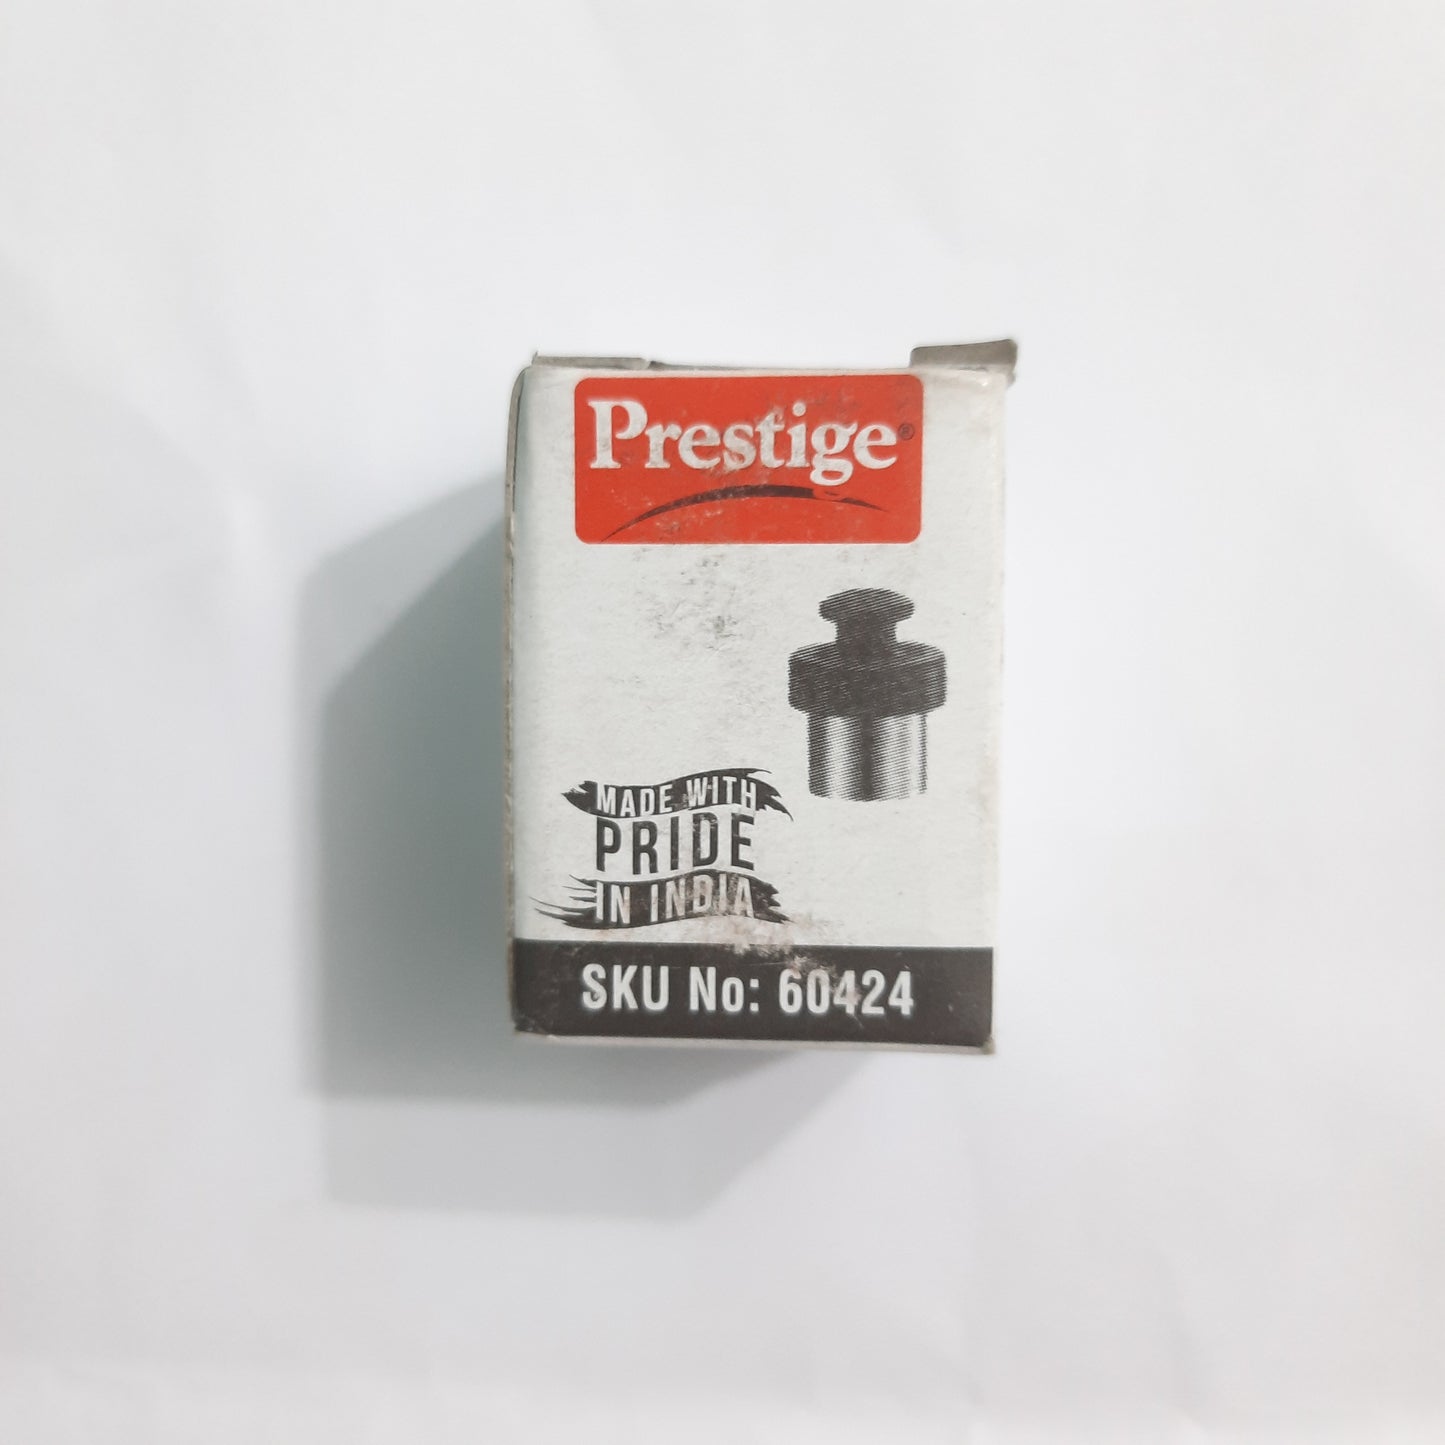 Prestige Popular Cooker Whistle